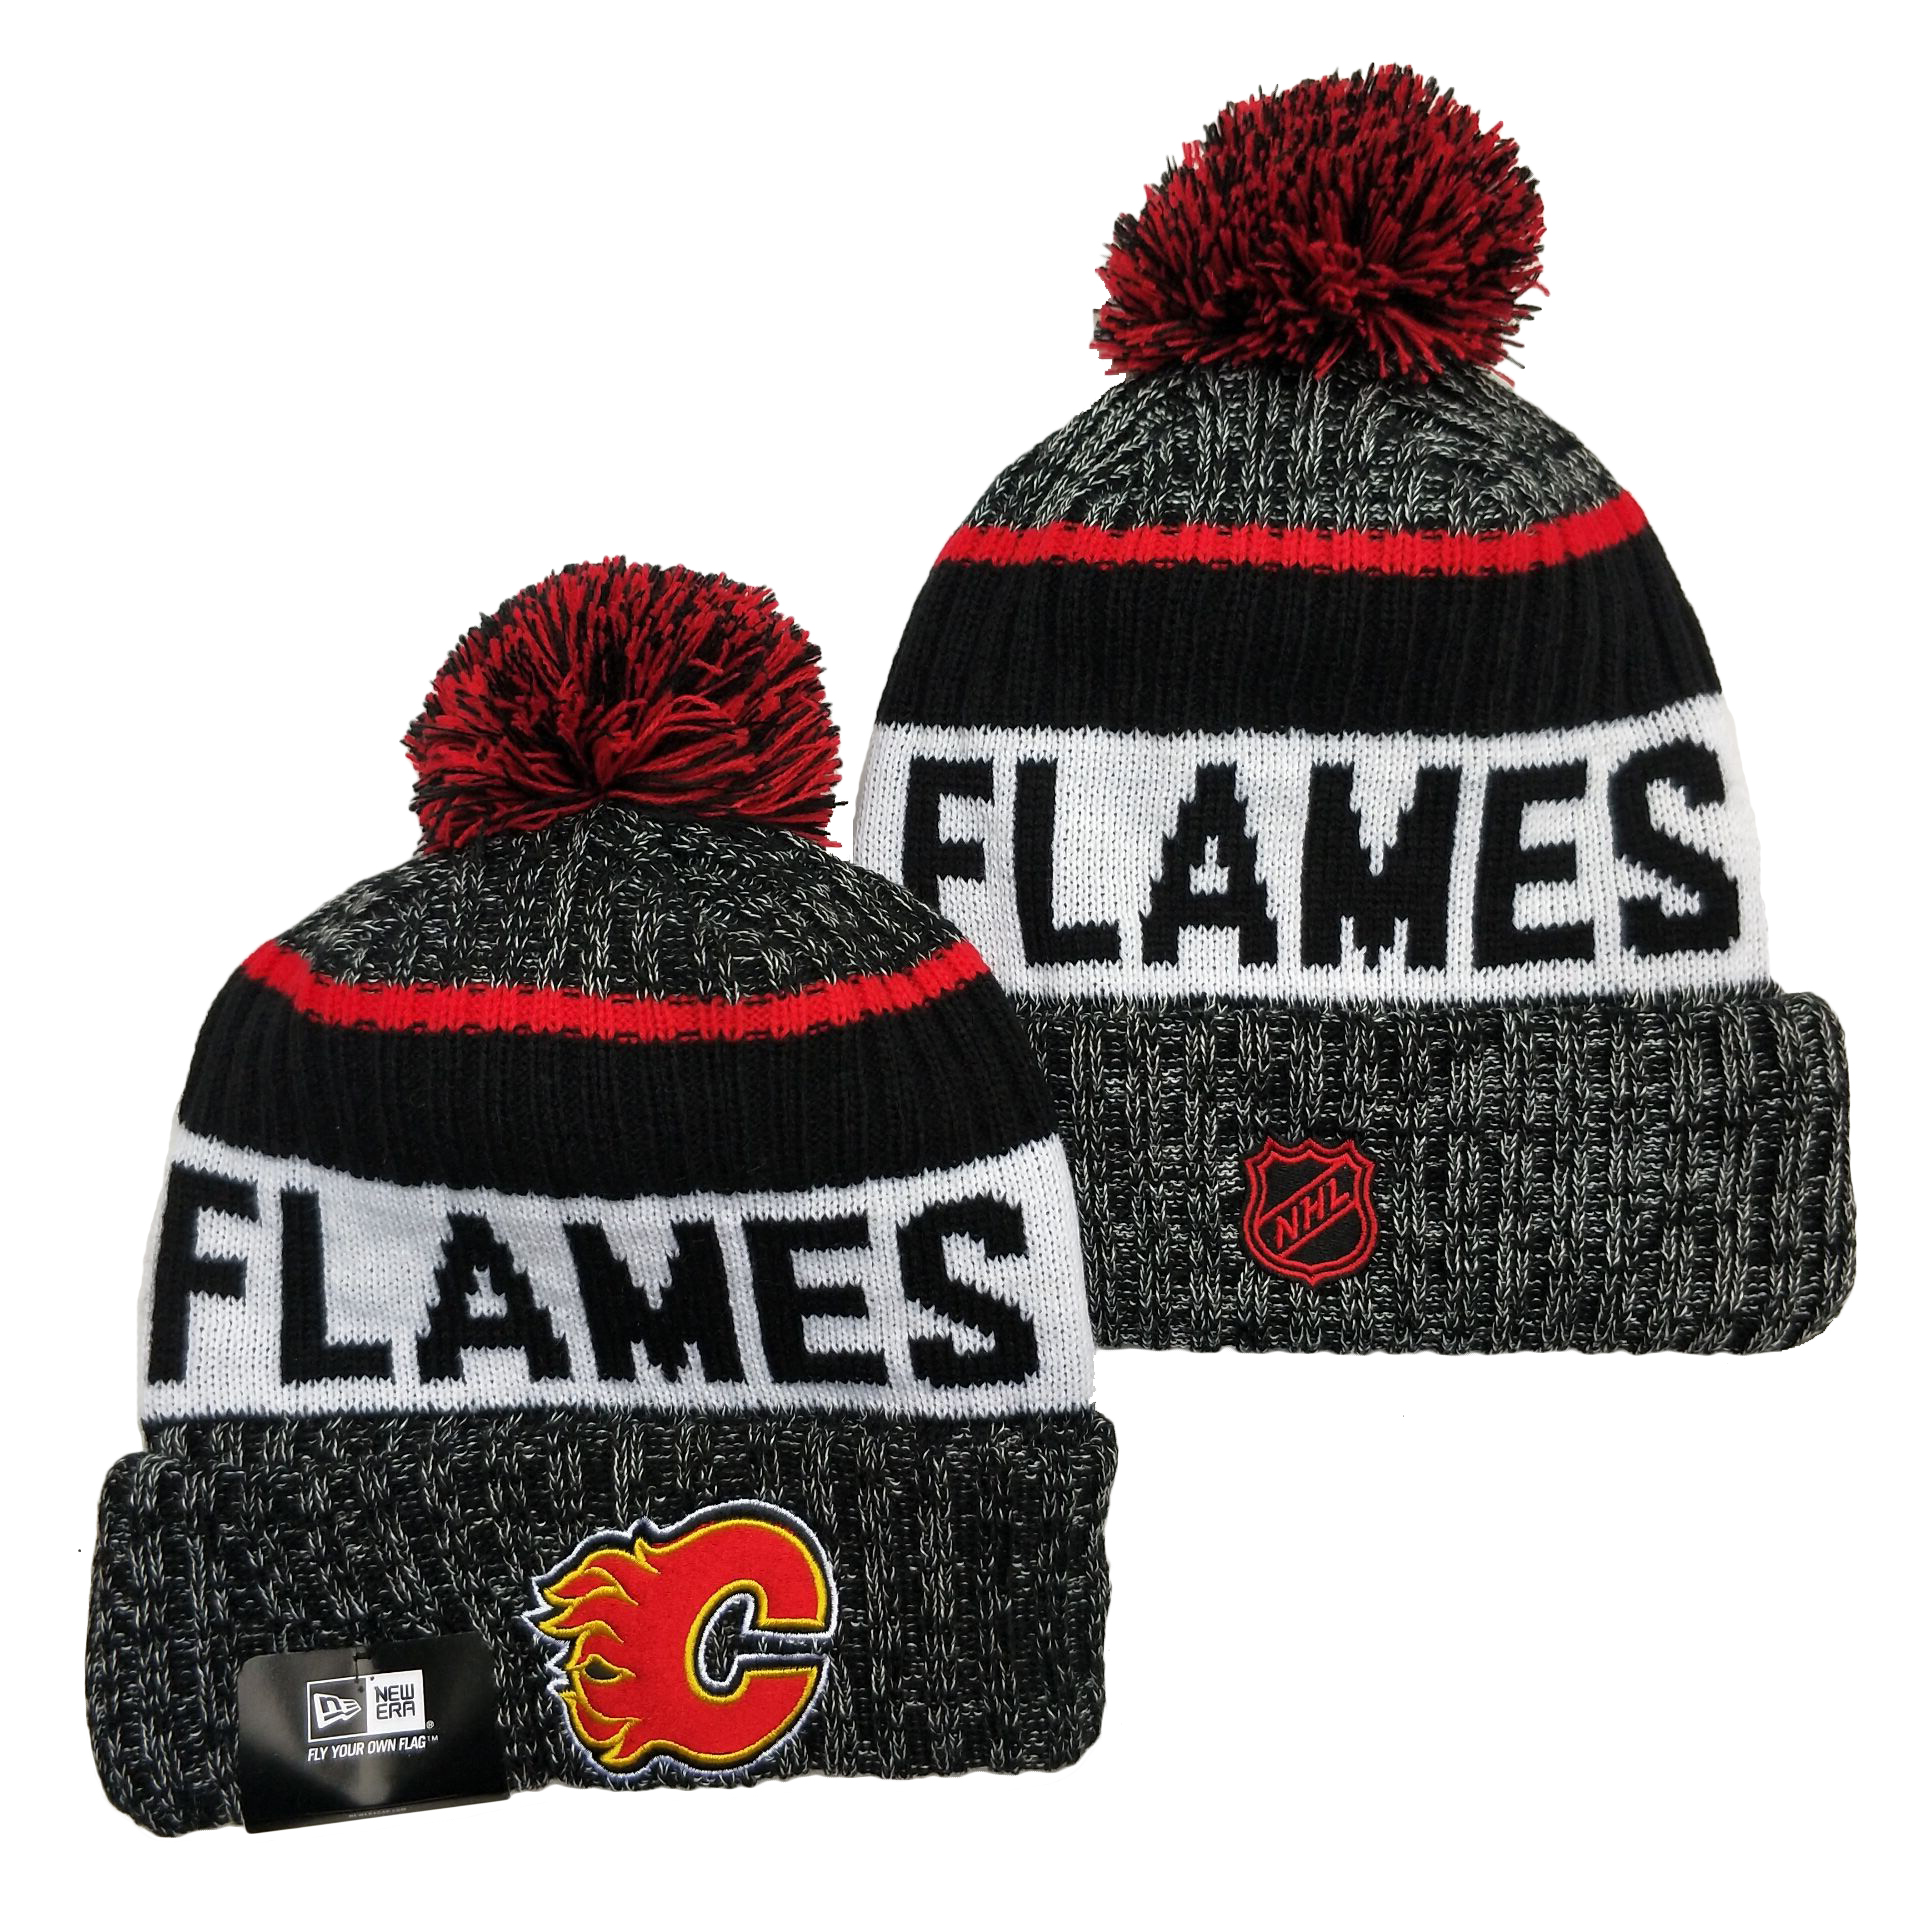 Calgary Flames Knit Hats 001